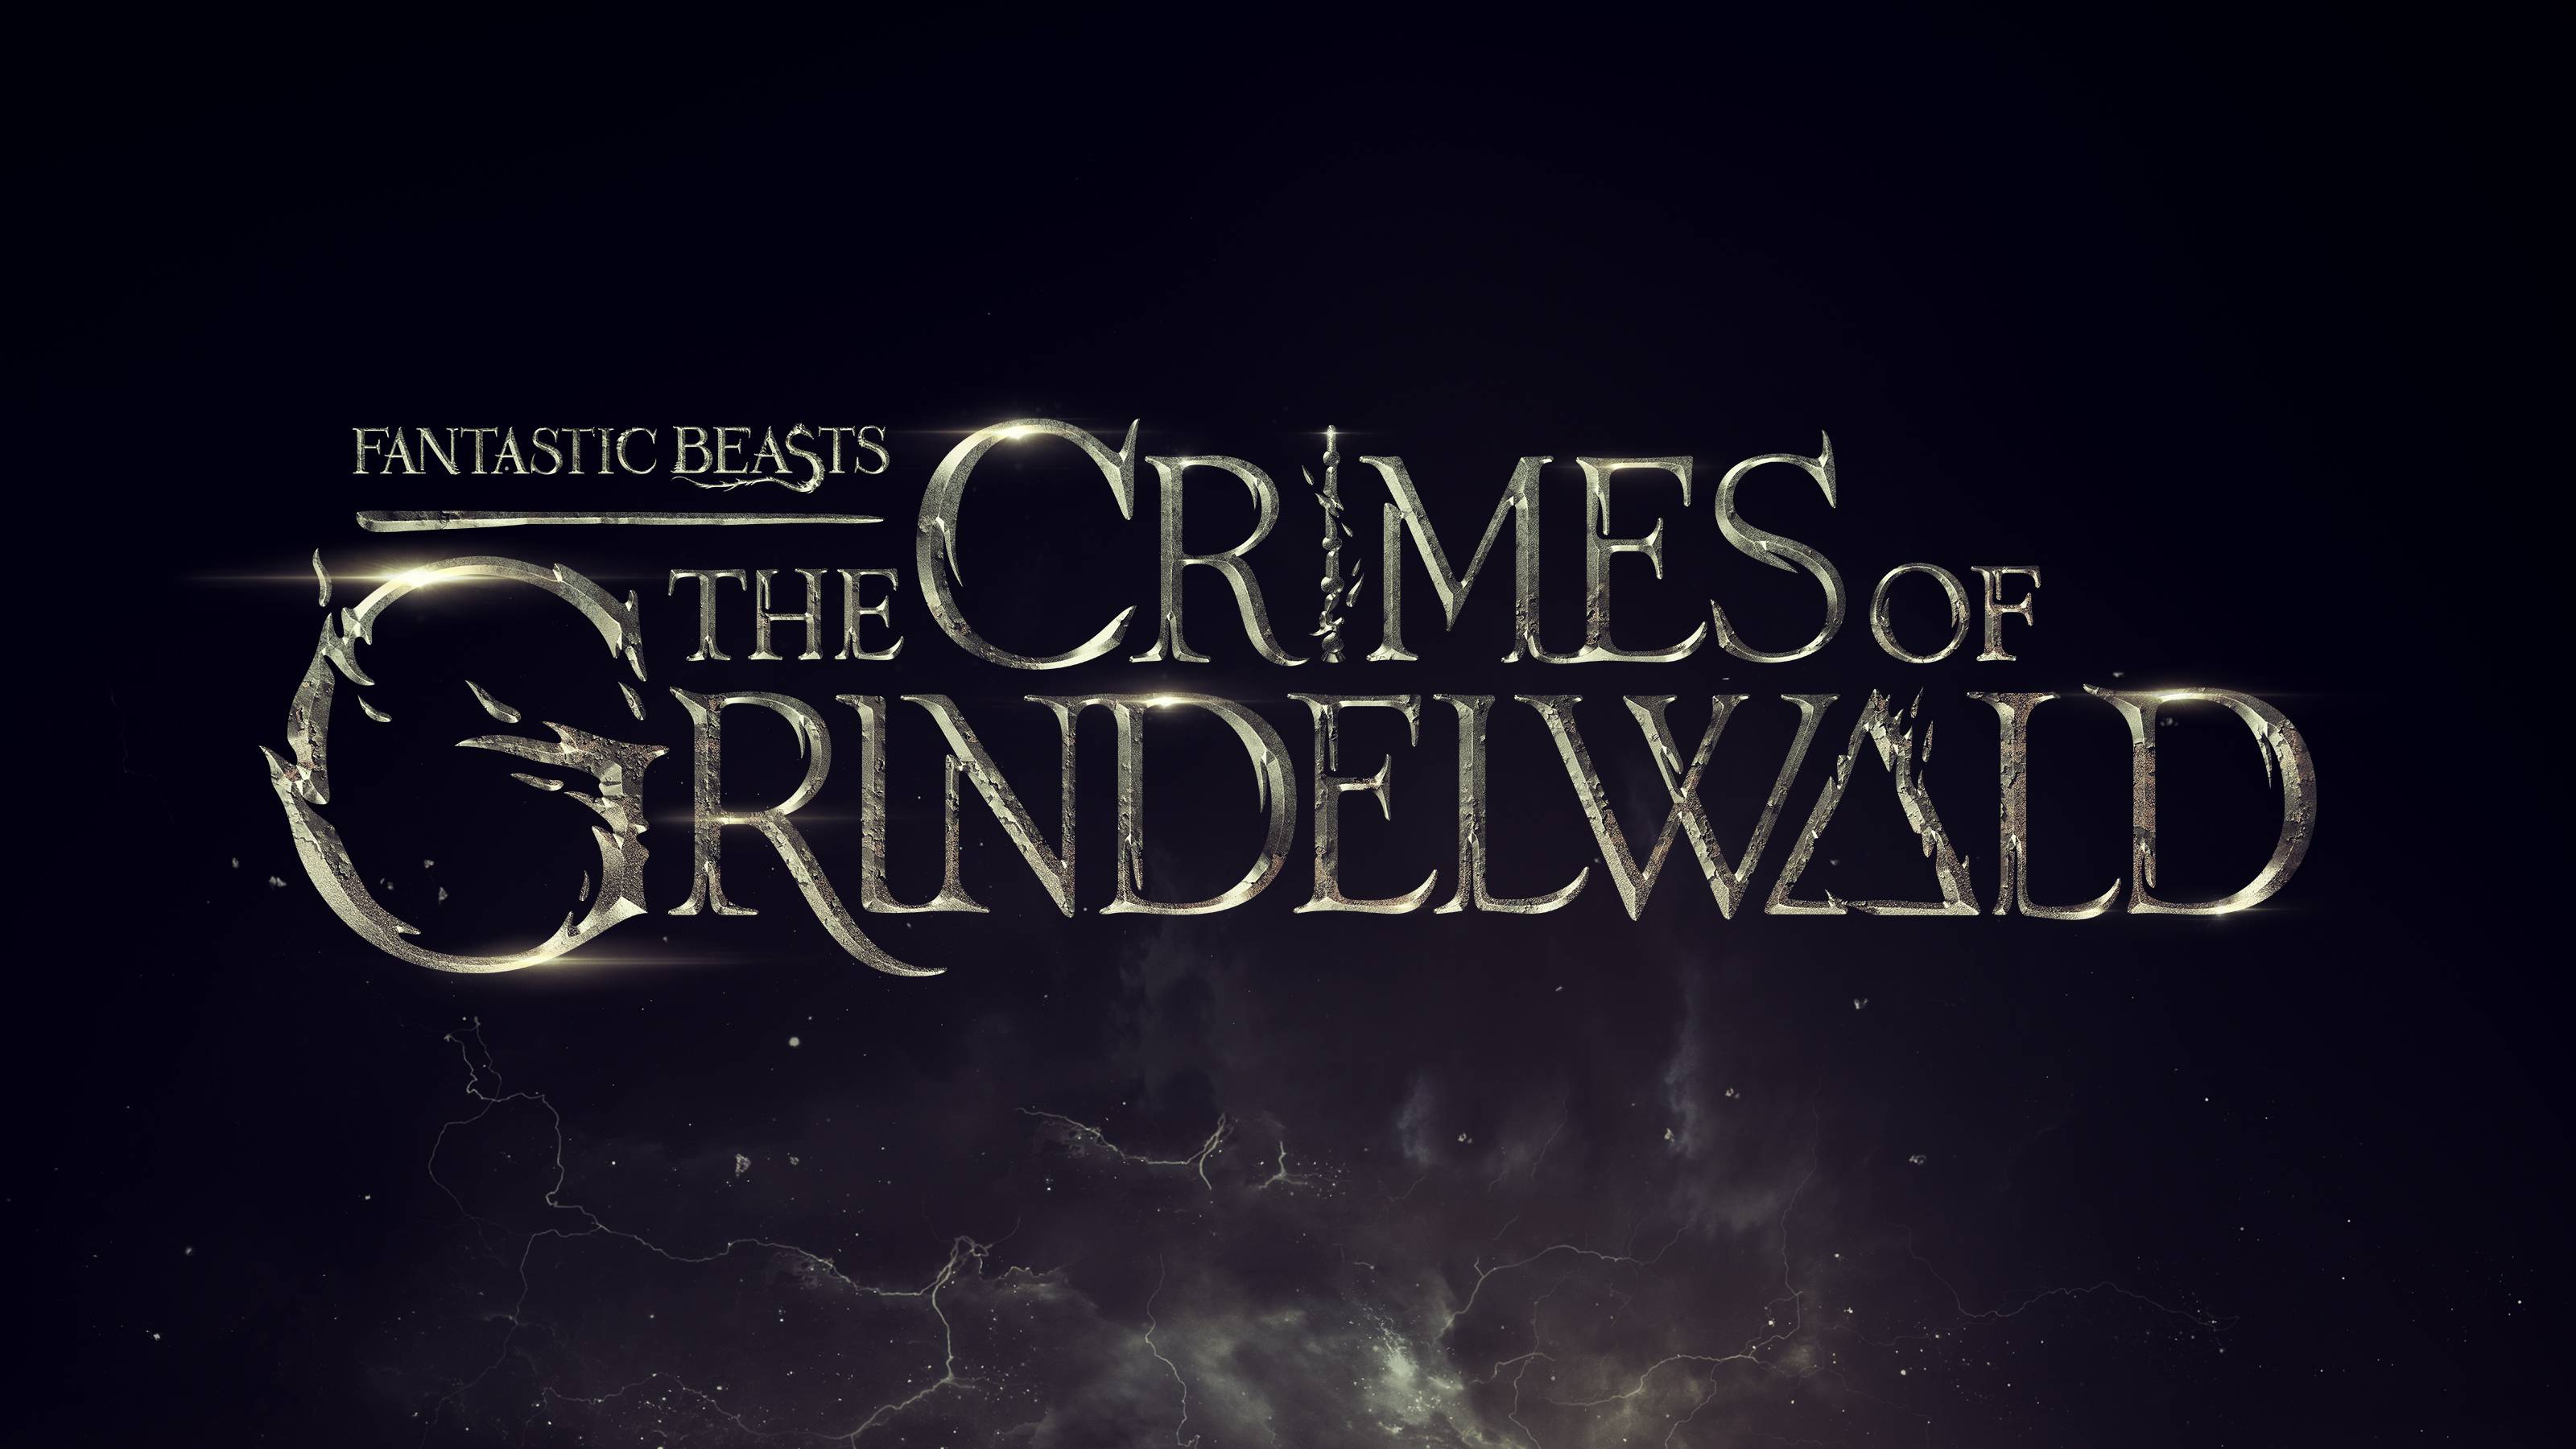 Fantastic Beasts: The Crimes of Grindelwald 2018 Wallpaper